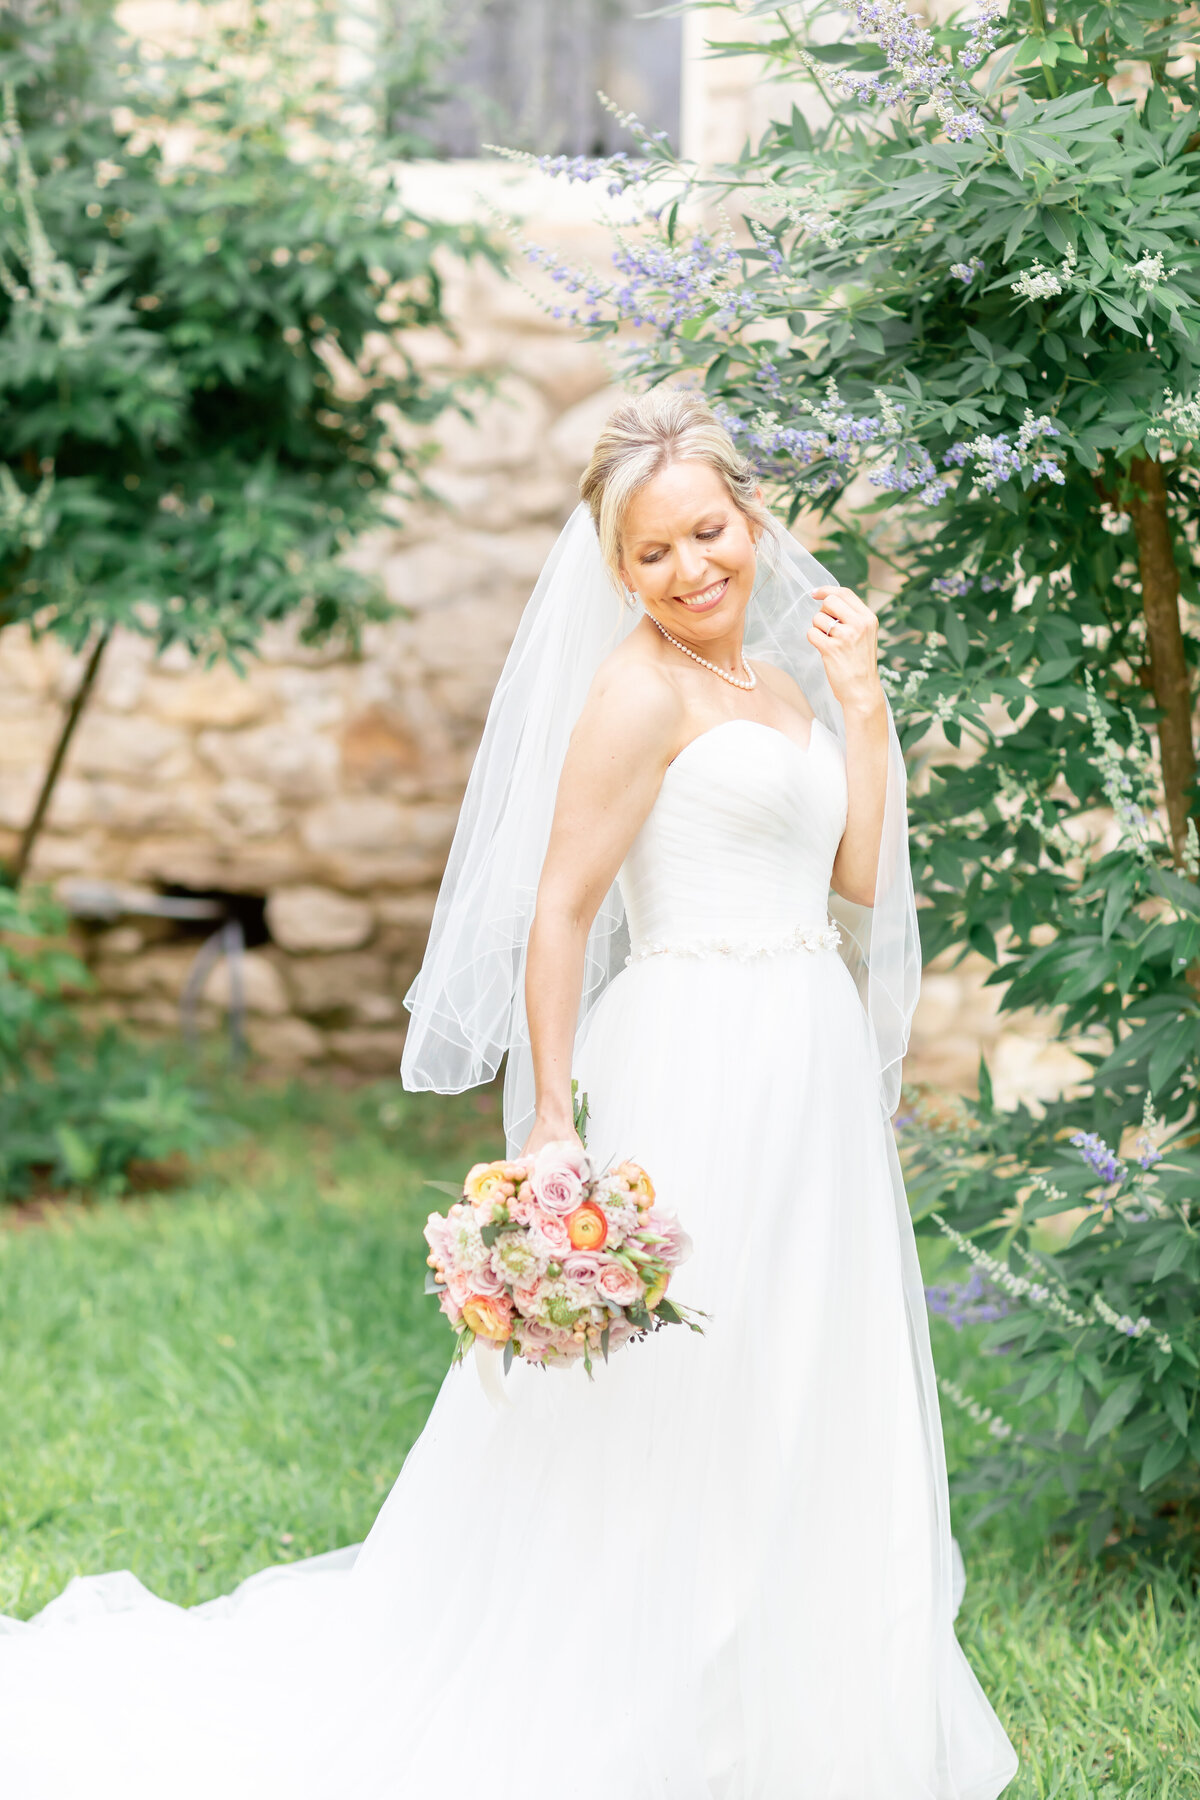 Keri+Todd_Spinellis-Wedding-Hannah-Charis-Photography-154540